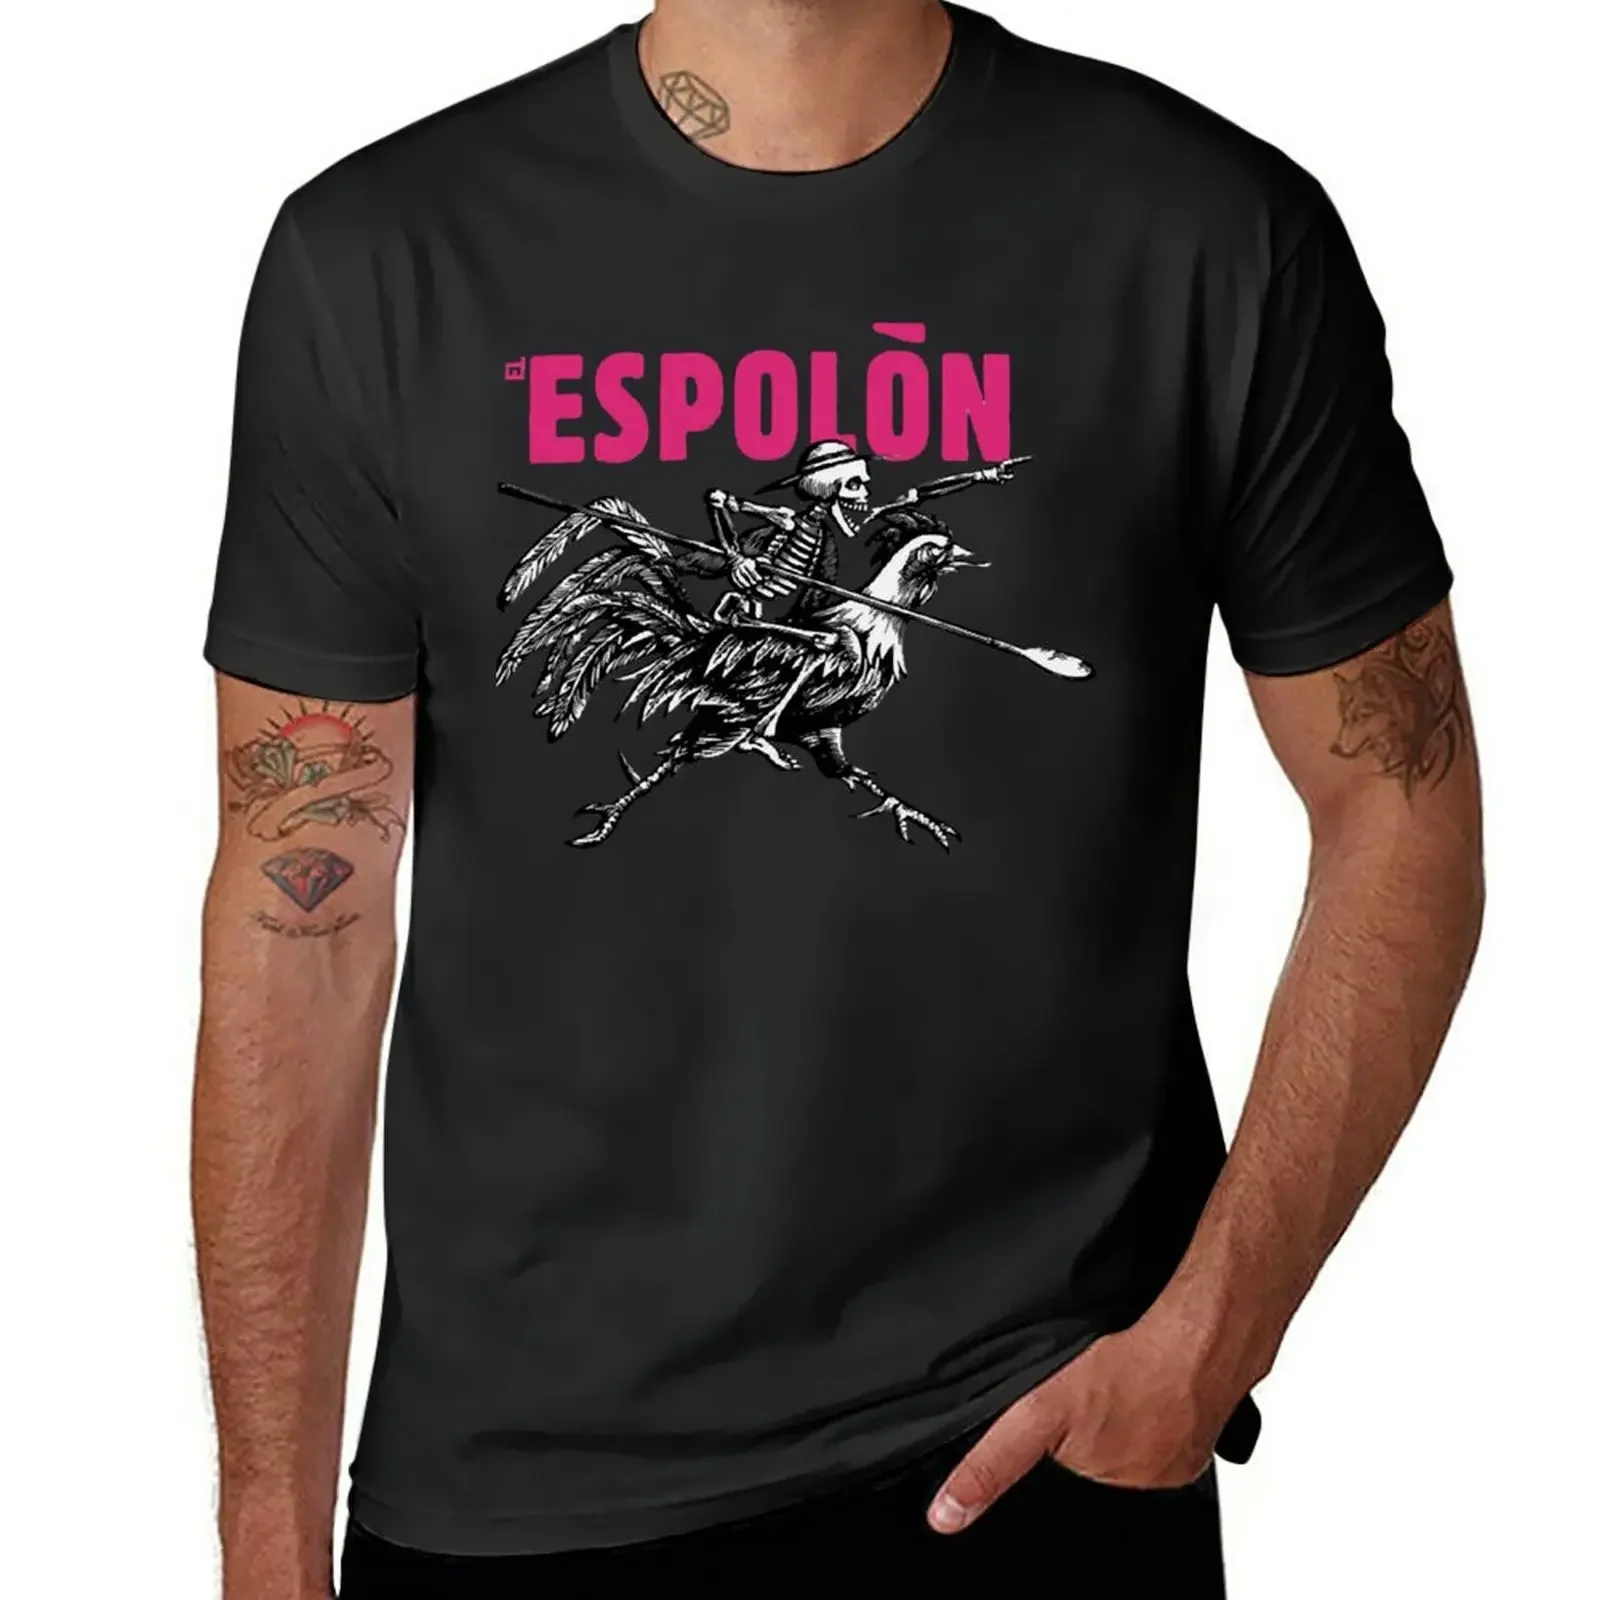 

el espolon tequila logo T-Shirt summer clothes oversized tops vintage t shirts for men graphic